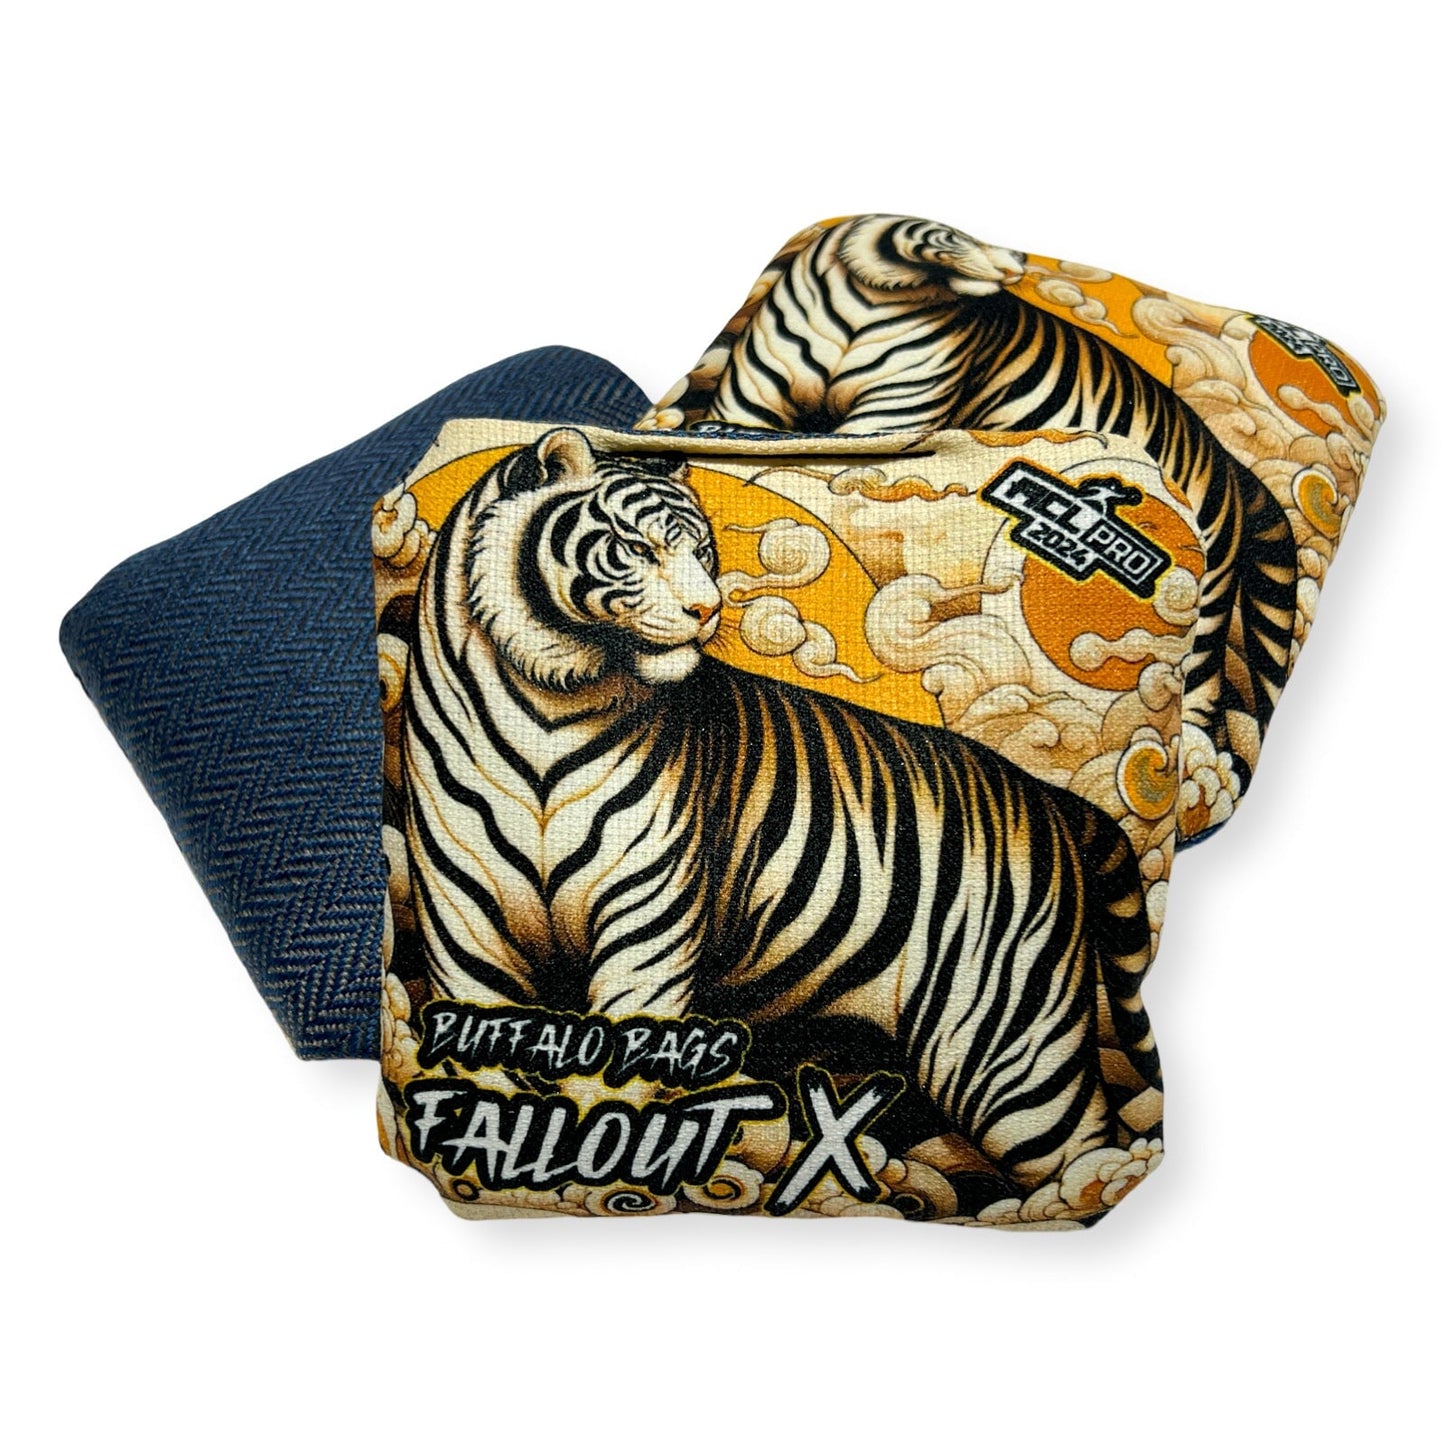 Buffalo Bags - Fallout X - Japanese Gold Limited Edition - 2024 ACL PRO BAGS Buffalo Boards Tora no Yume (tiger) 